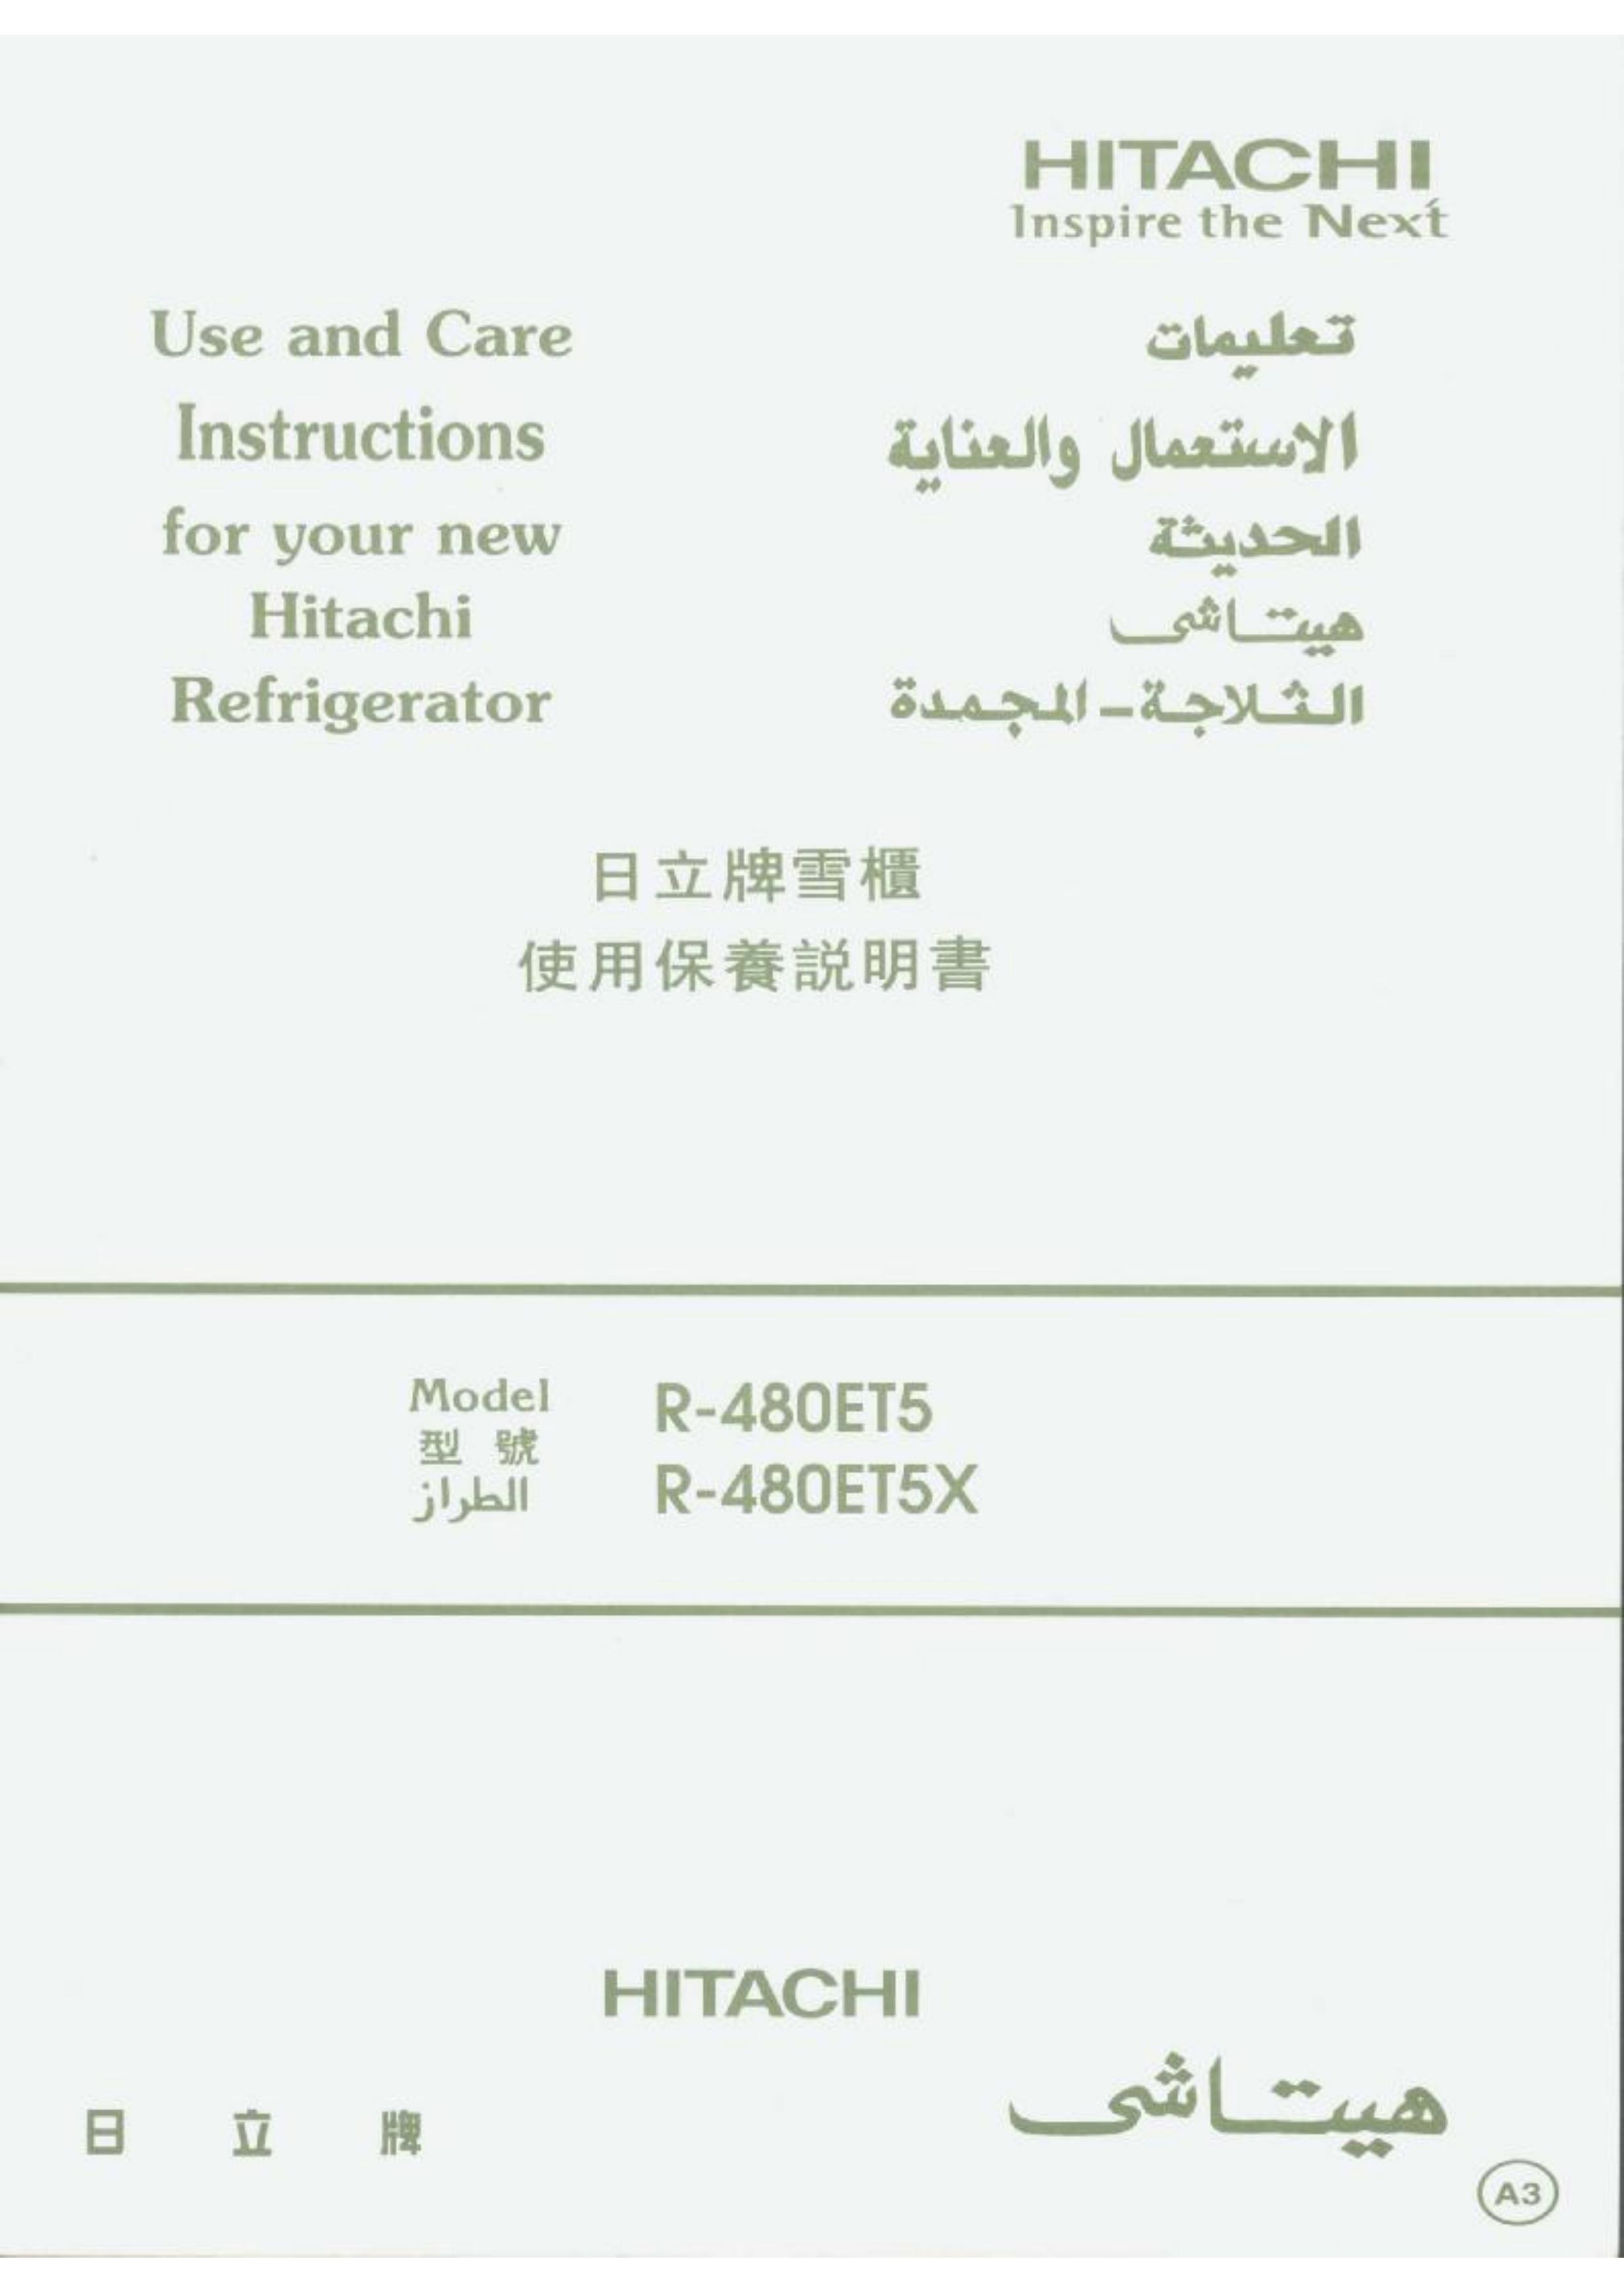 Hitachi R-480ET5 Refrigerator User Manual